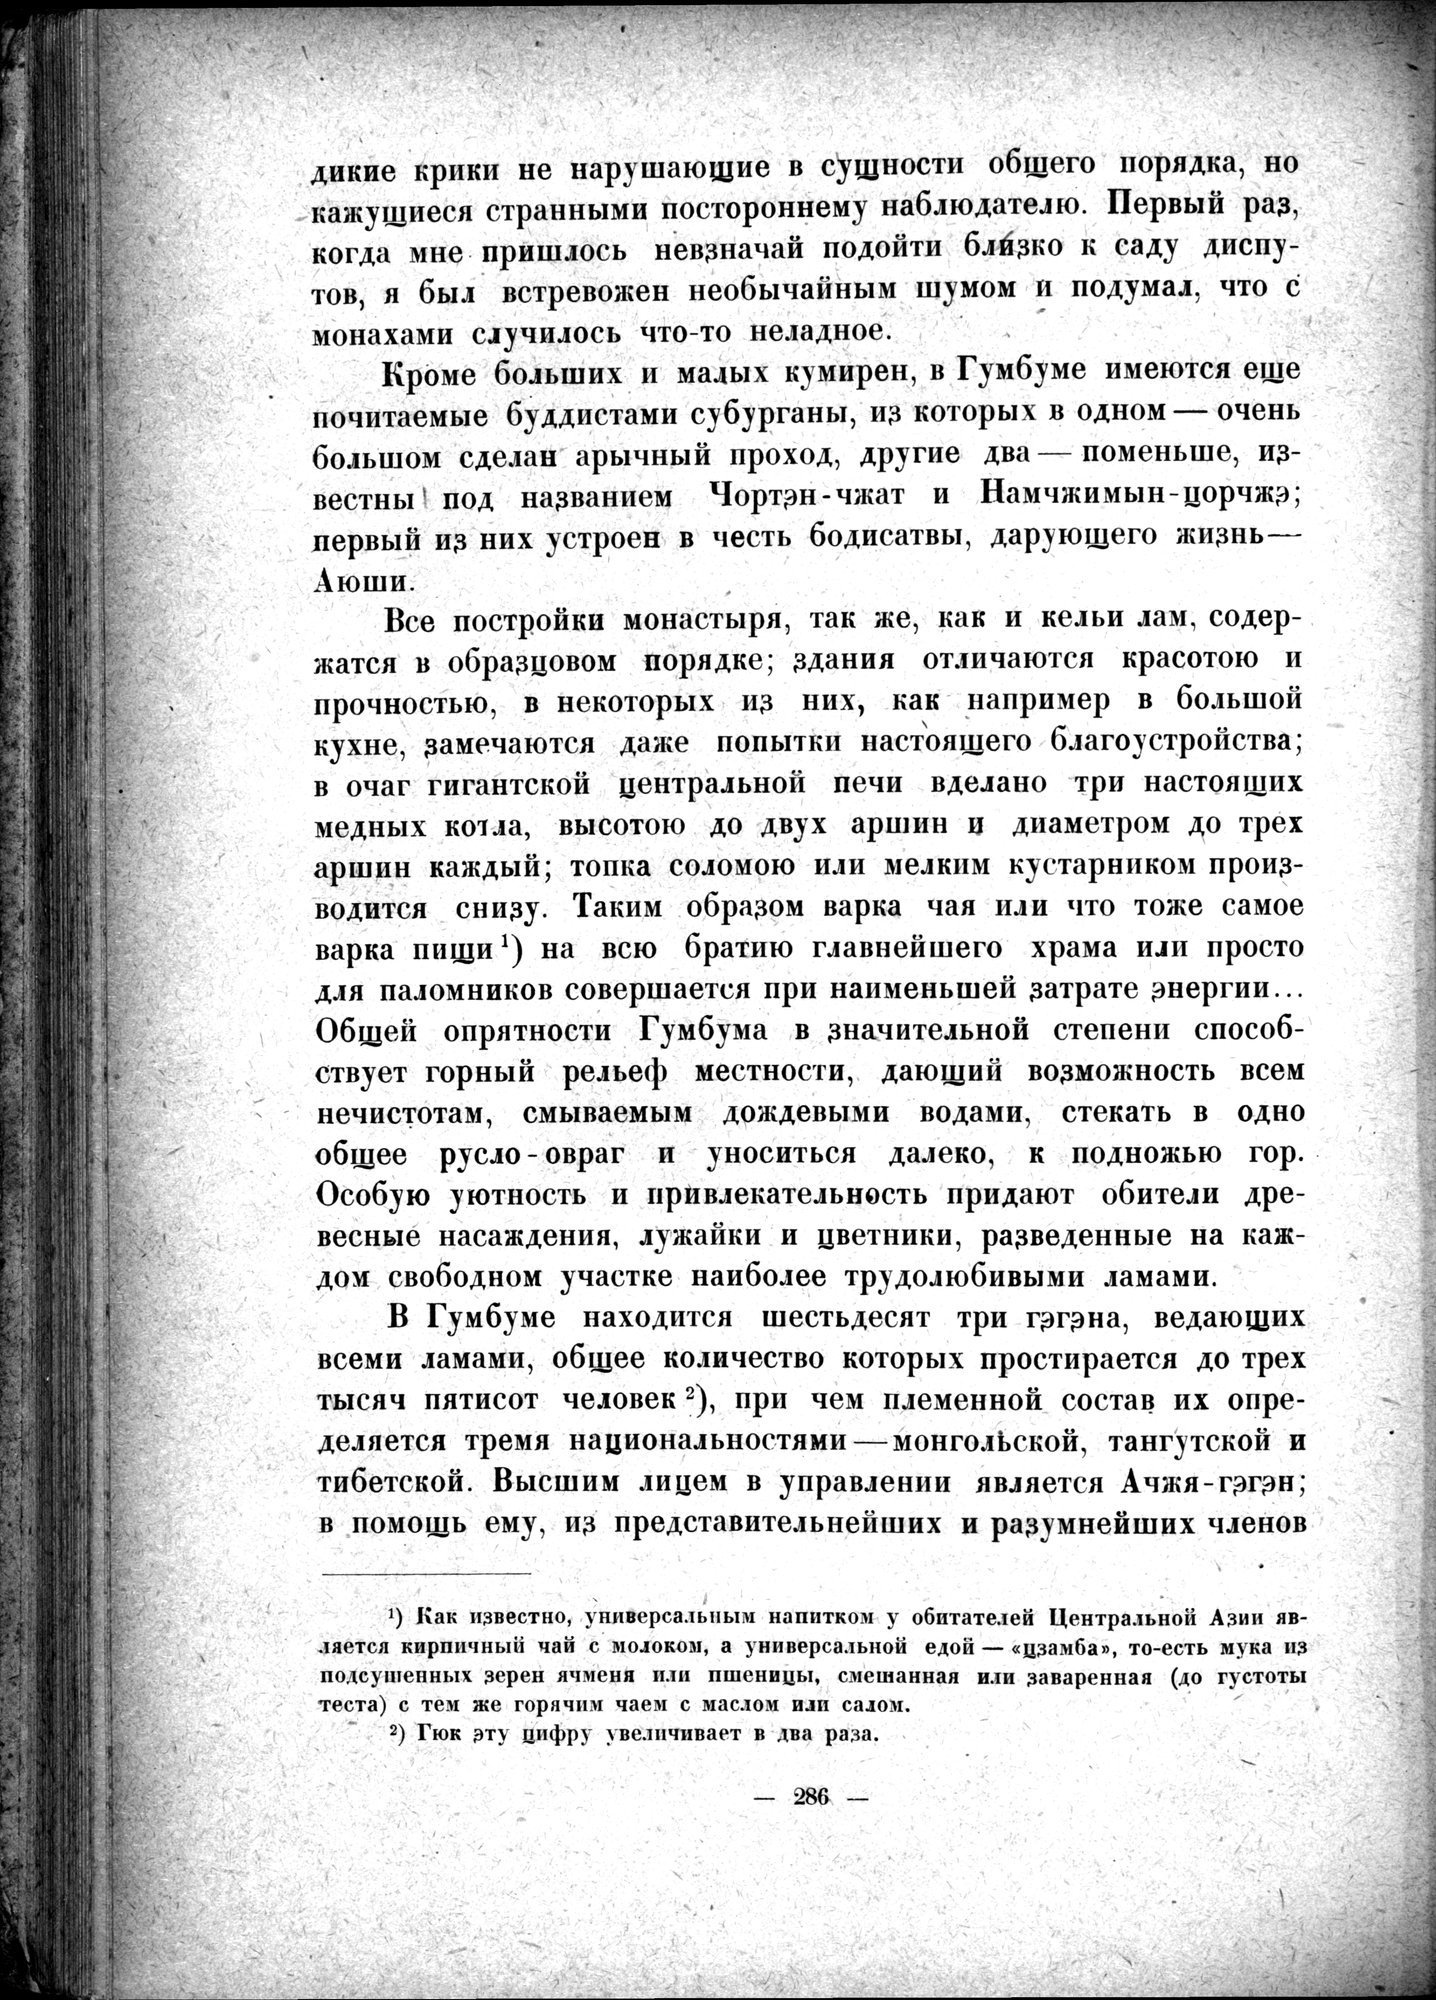 Mongoliya i Amdo i mertby gorod Khara-Khoto : vol.1 / Page 336 (Grayscale High Resolution Image)